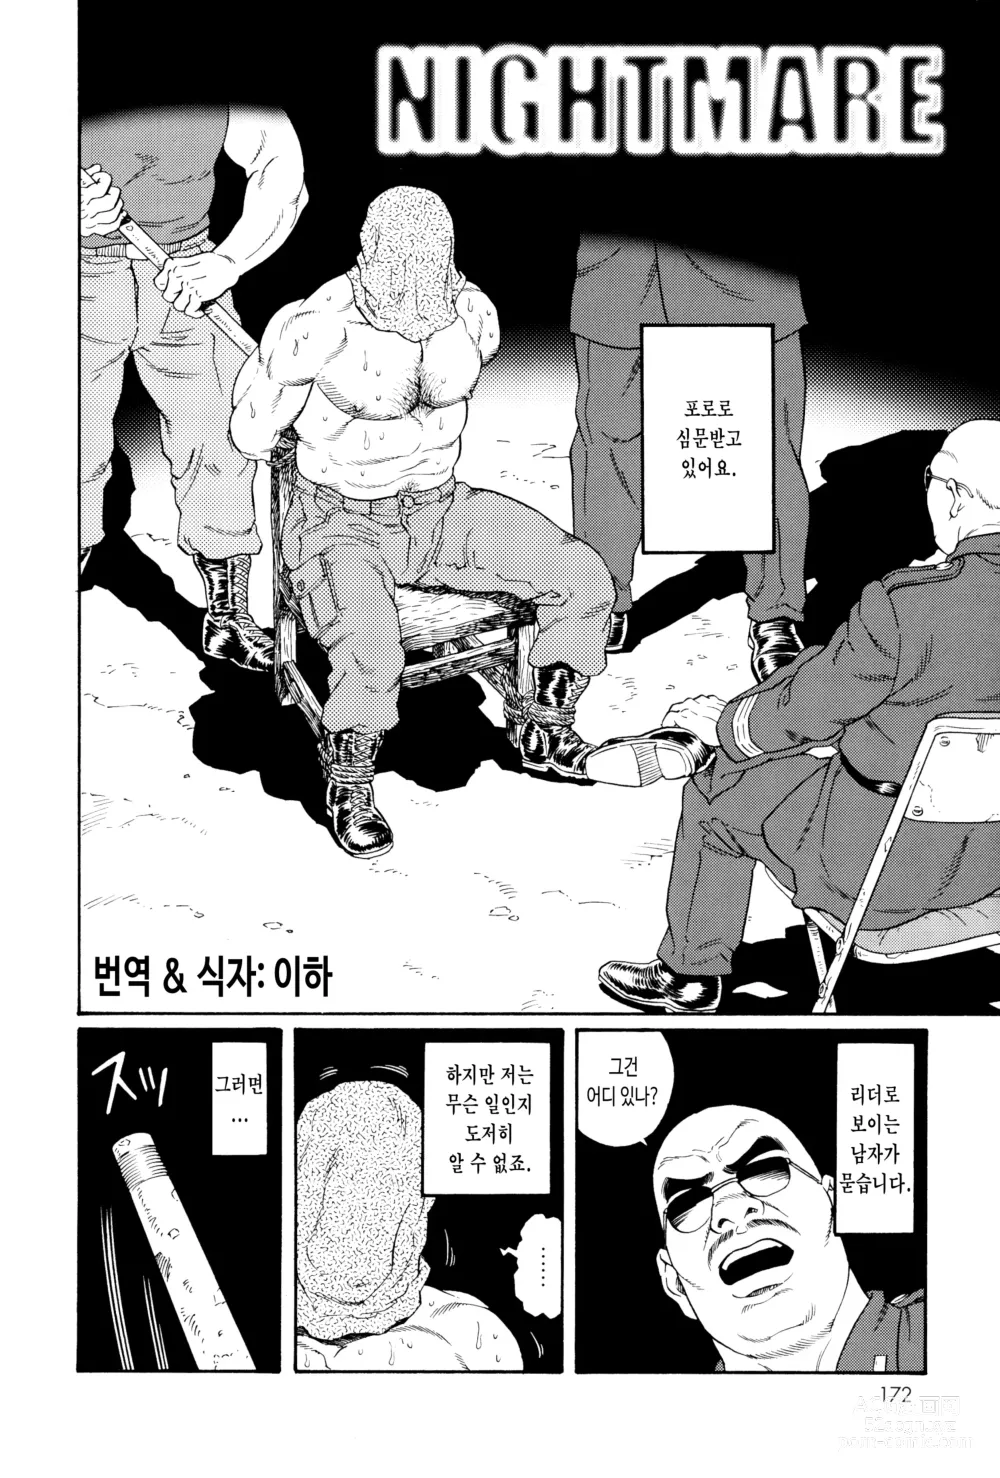 Page 4 of manga NIGHTMARE